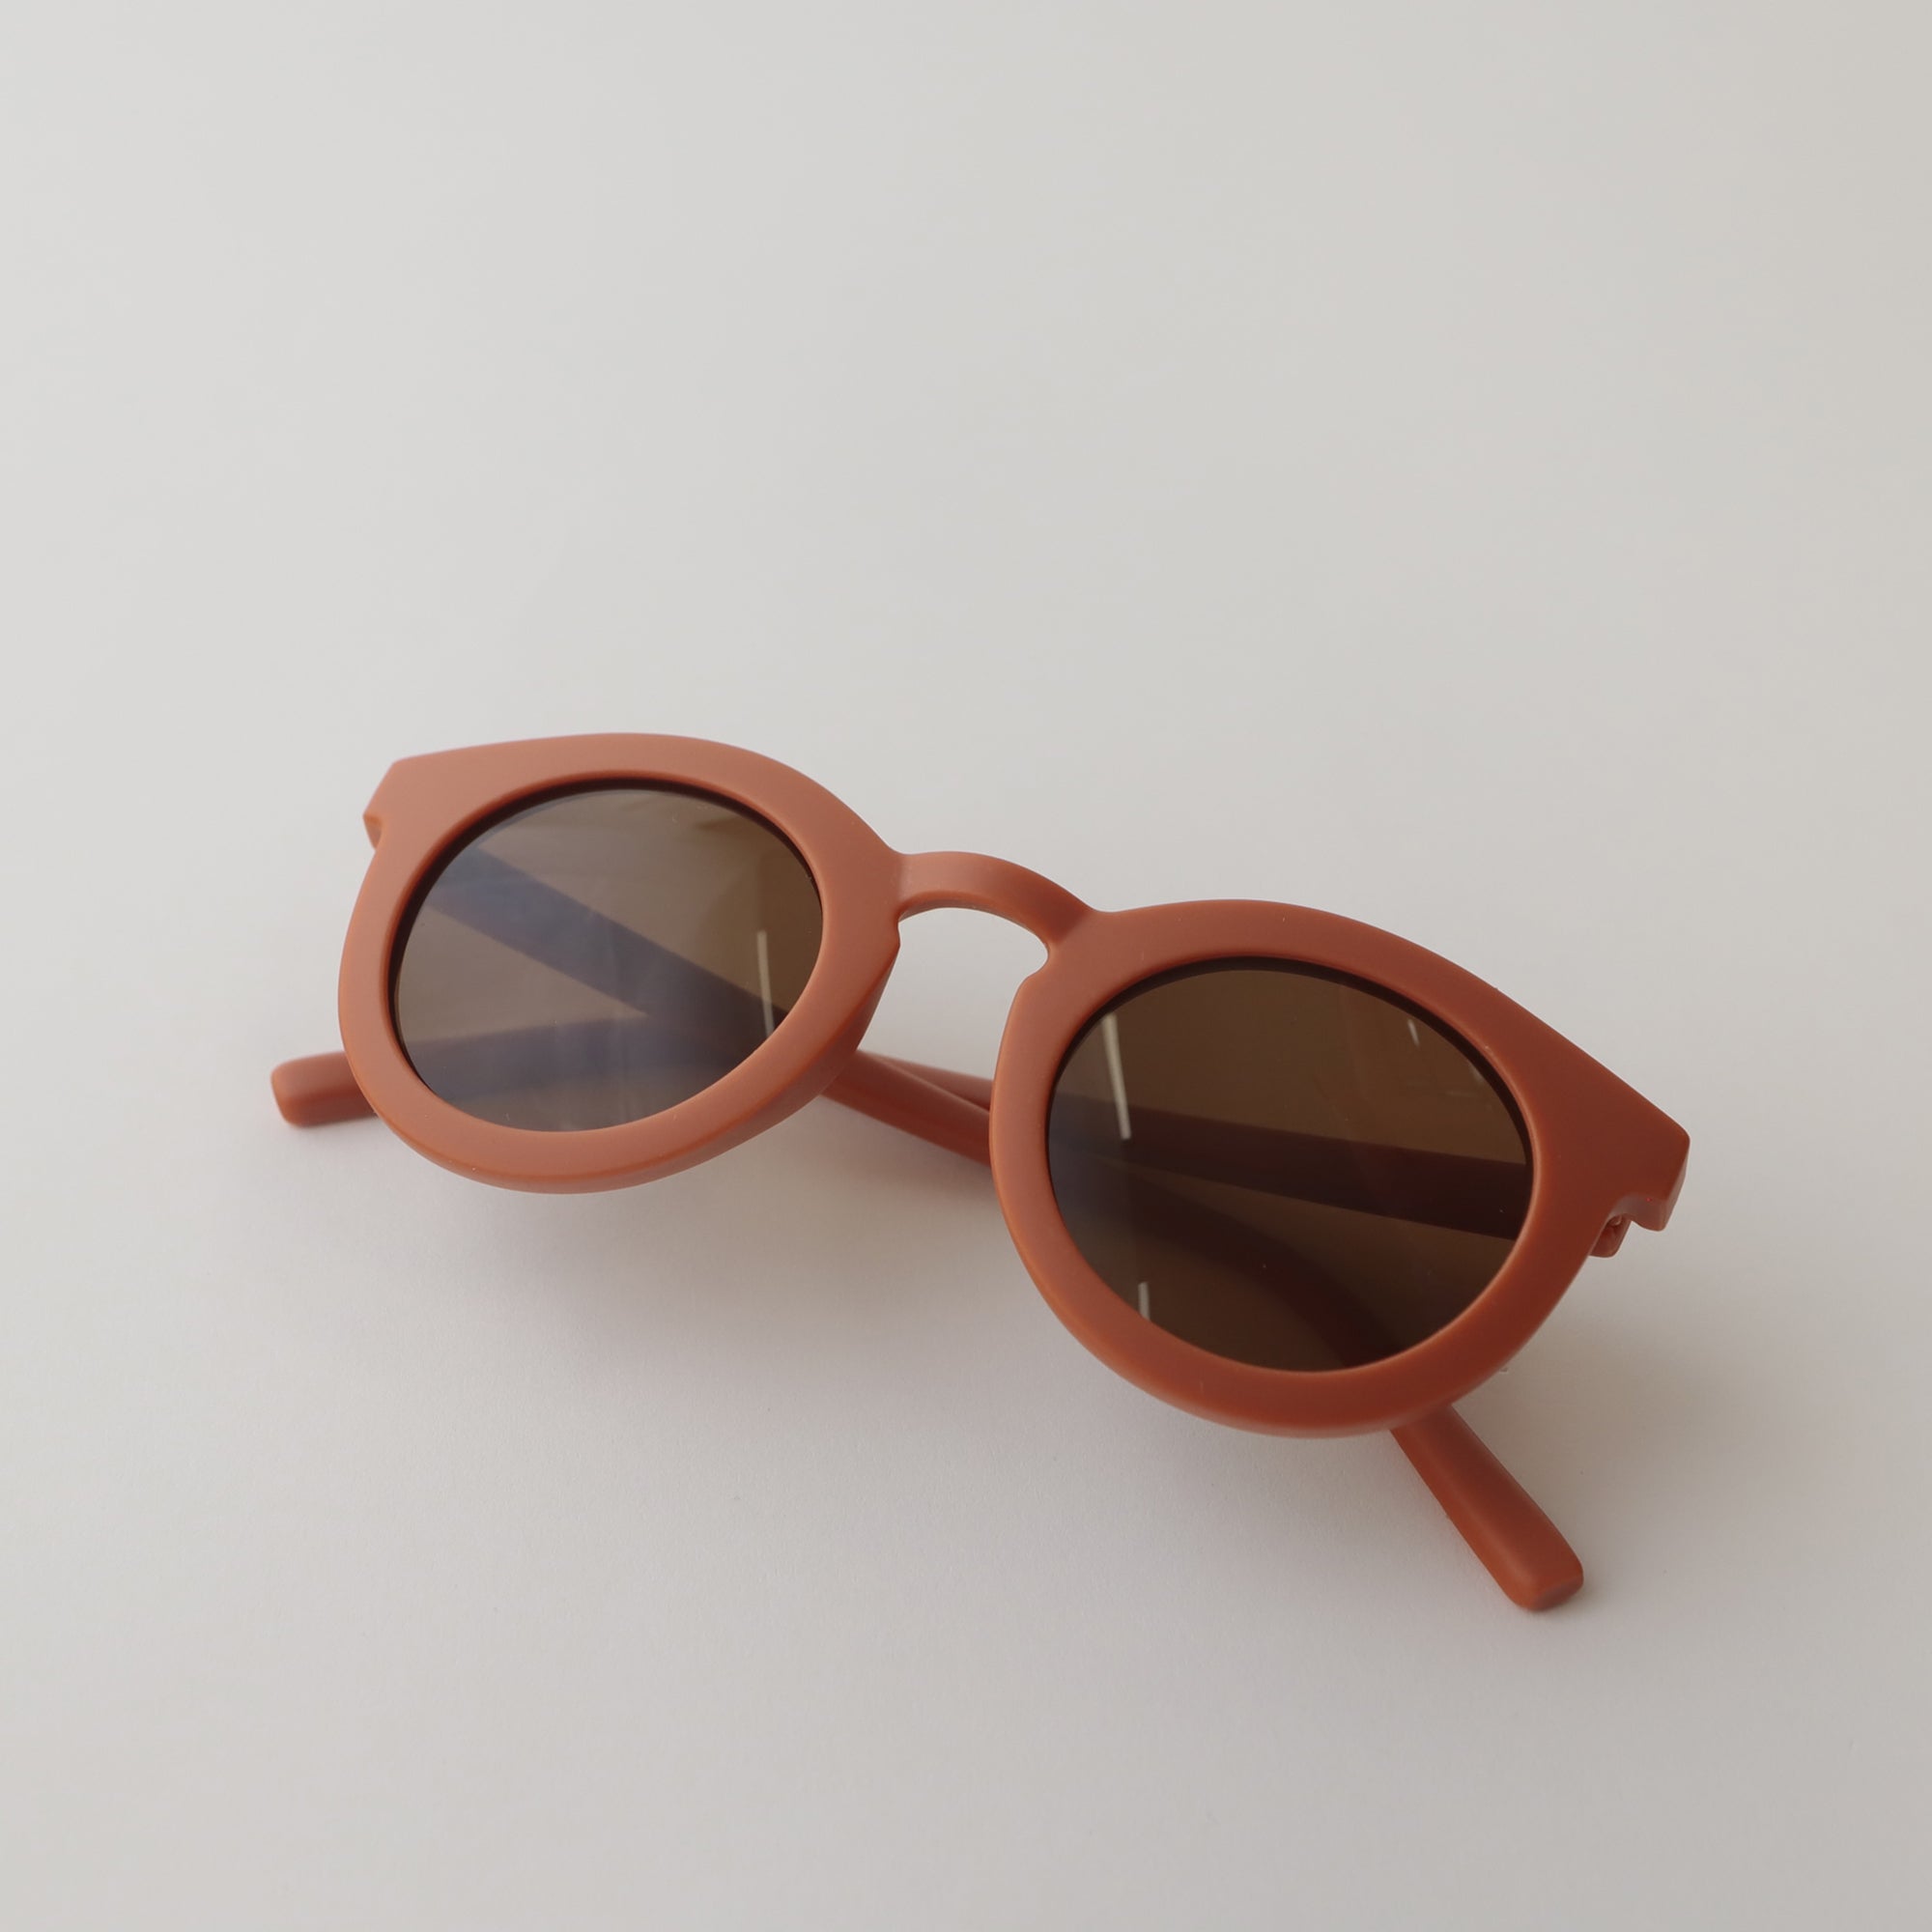 Clay Sunglasses